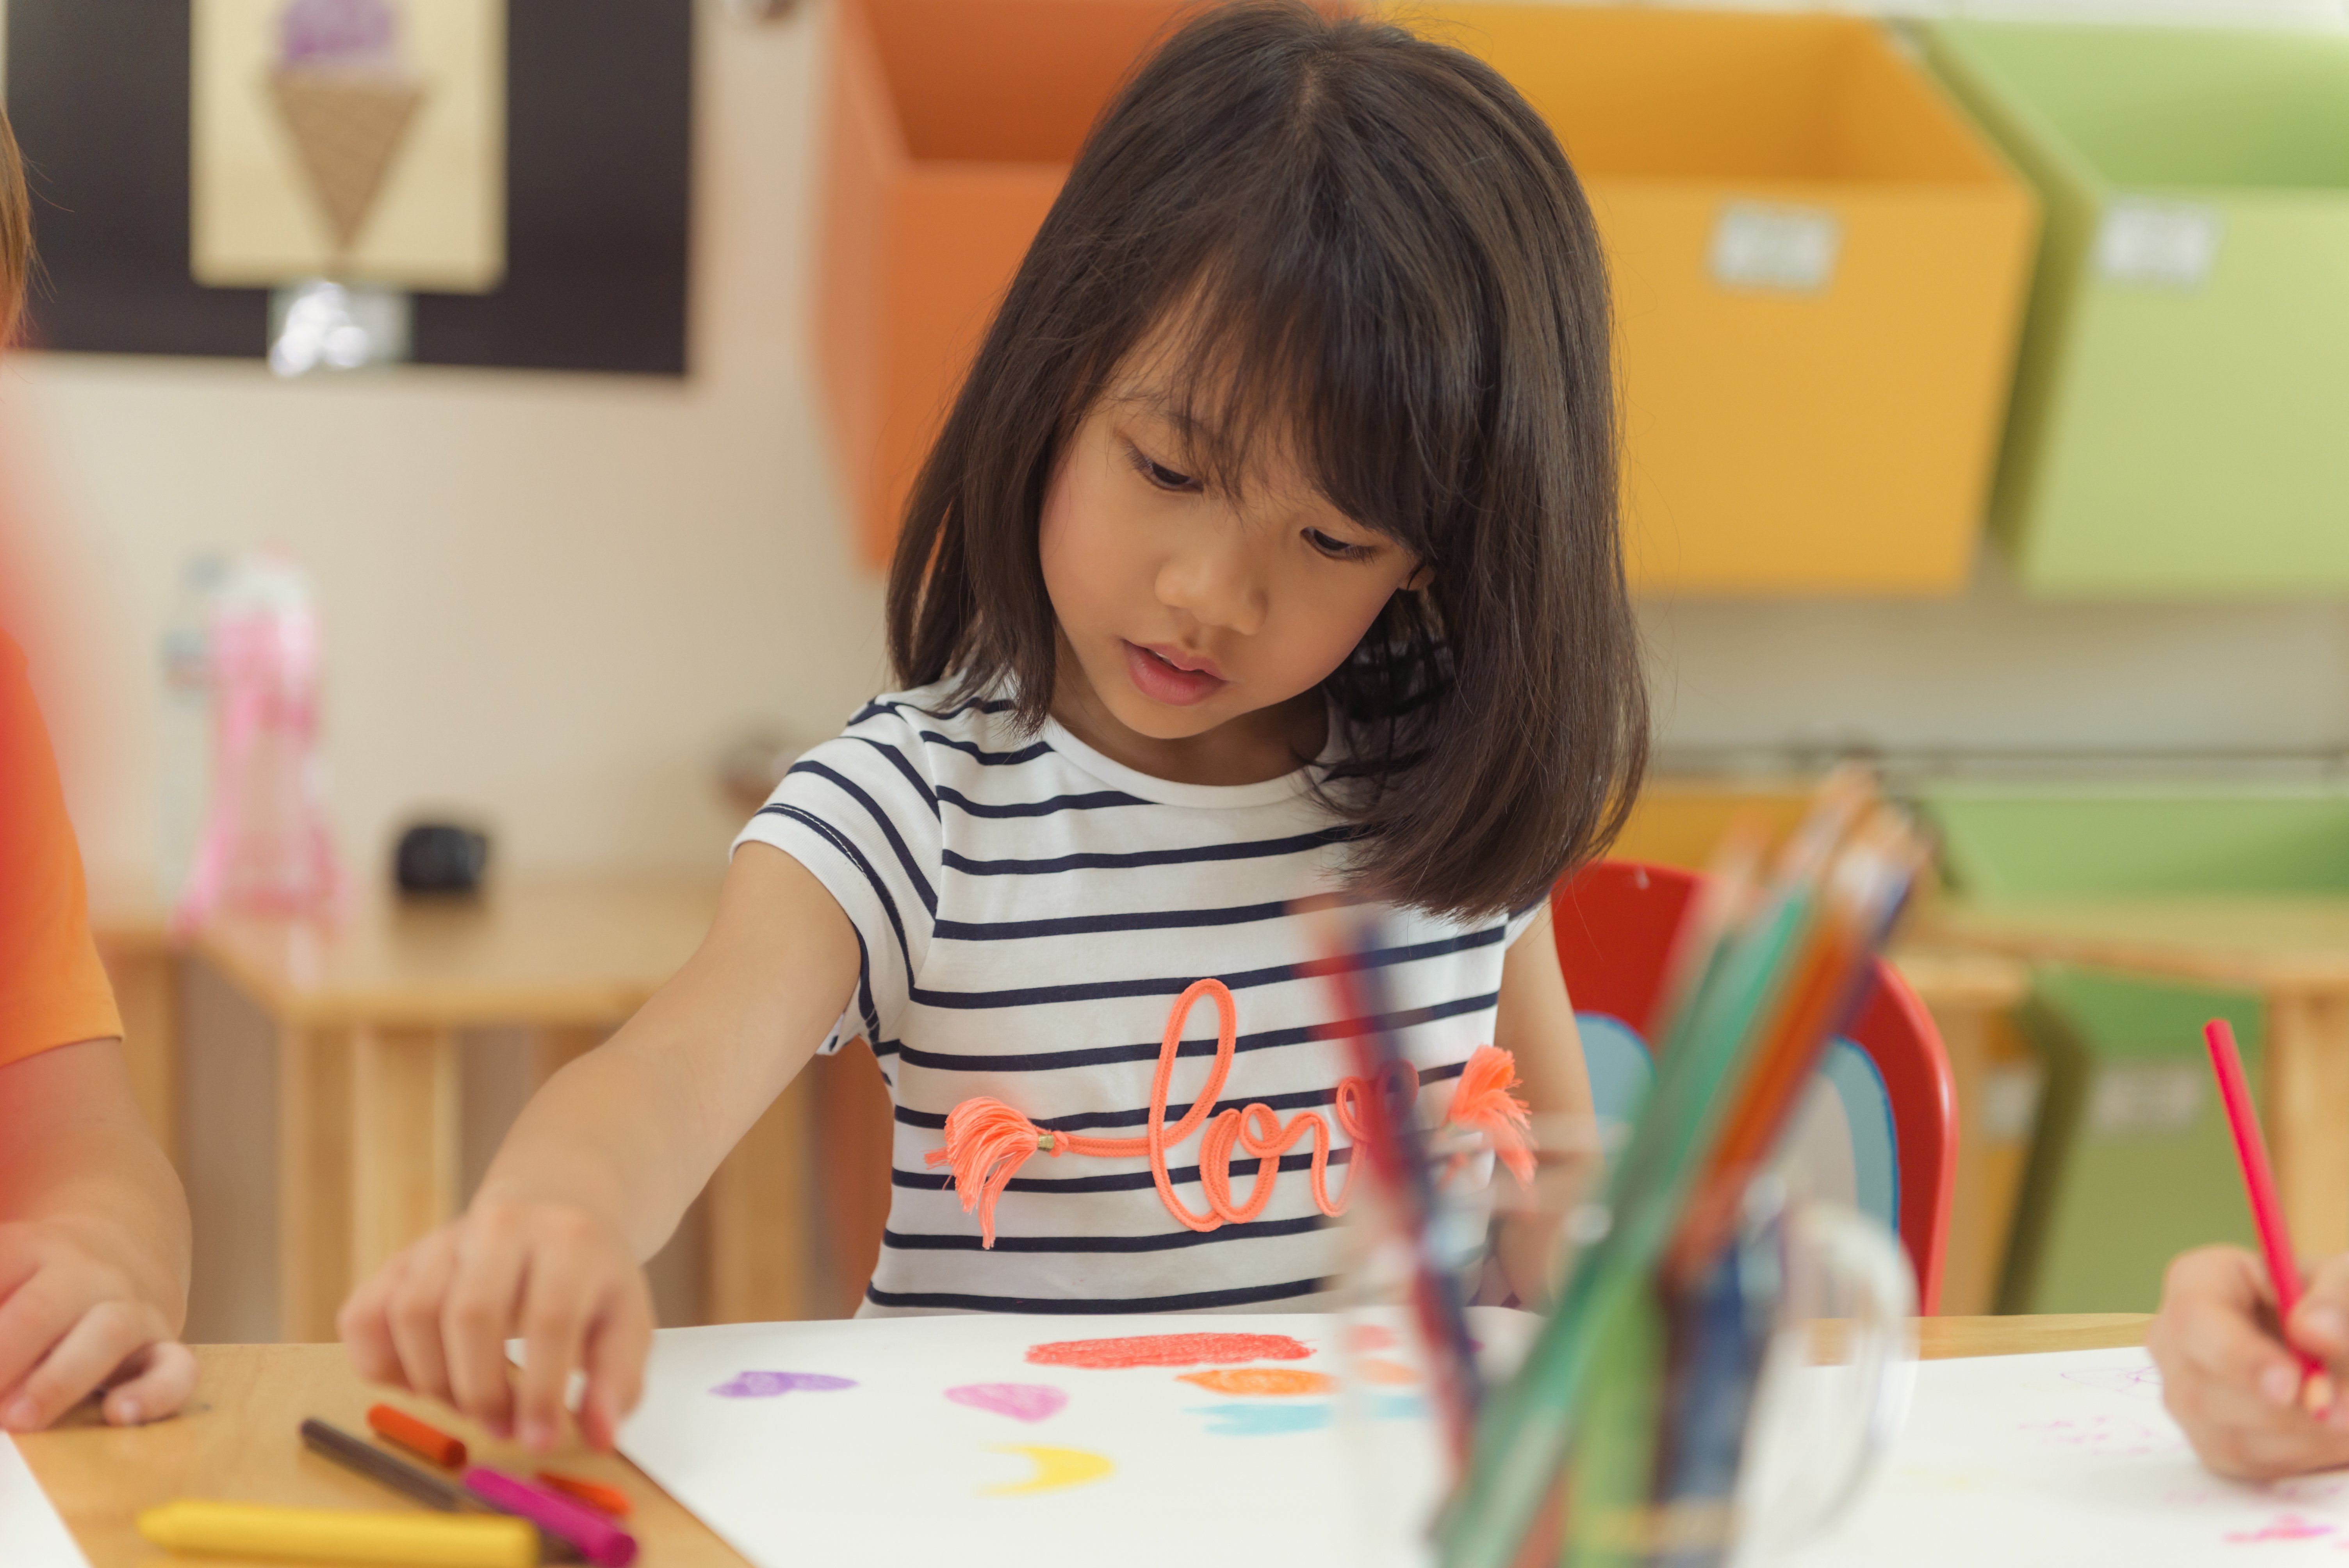 girl-drawing-color-pencils-kindergarten-classroom-preschool-kid-education-concept-vintage-effect-style-pictures